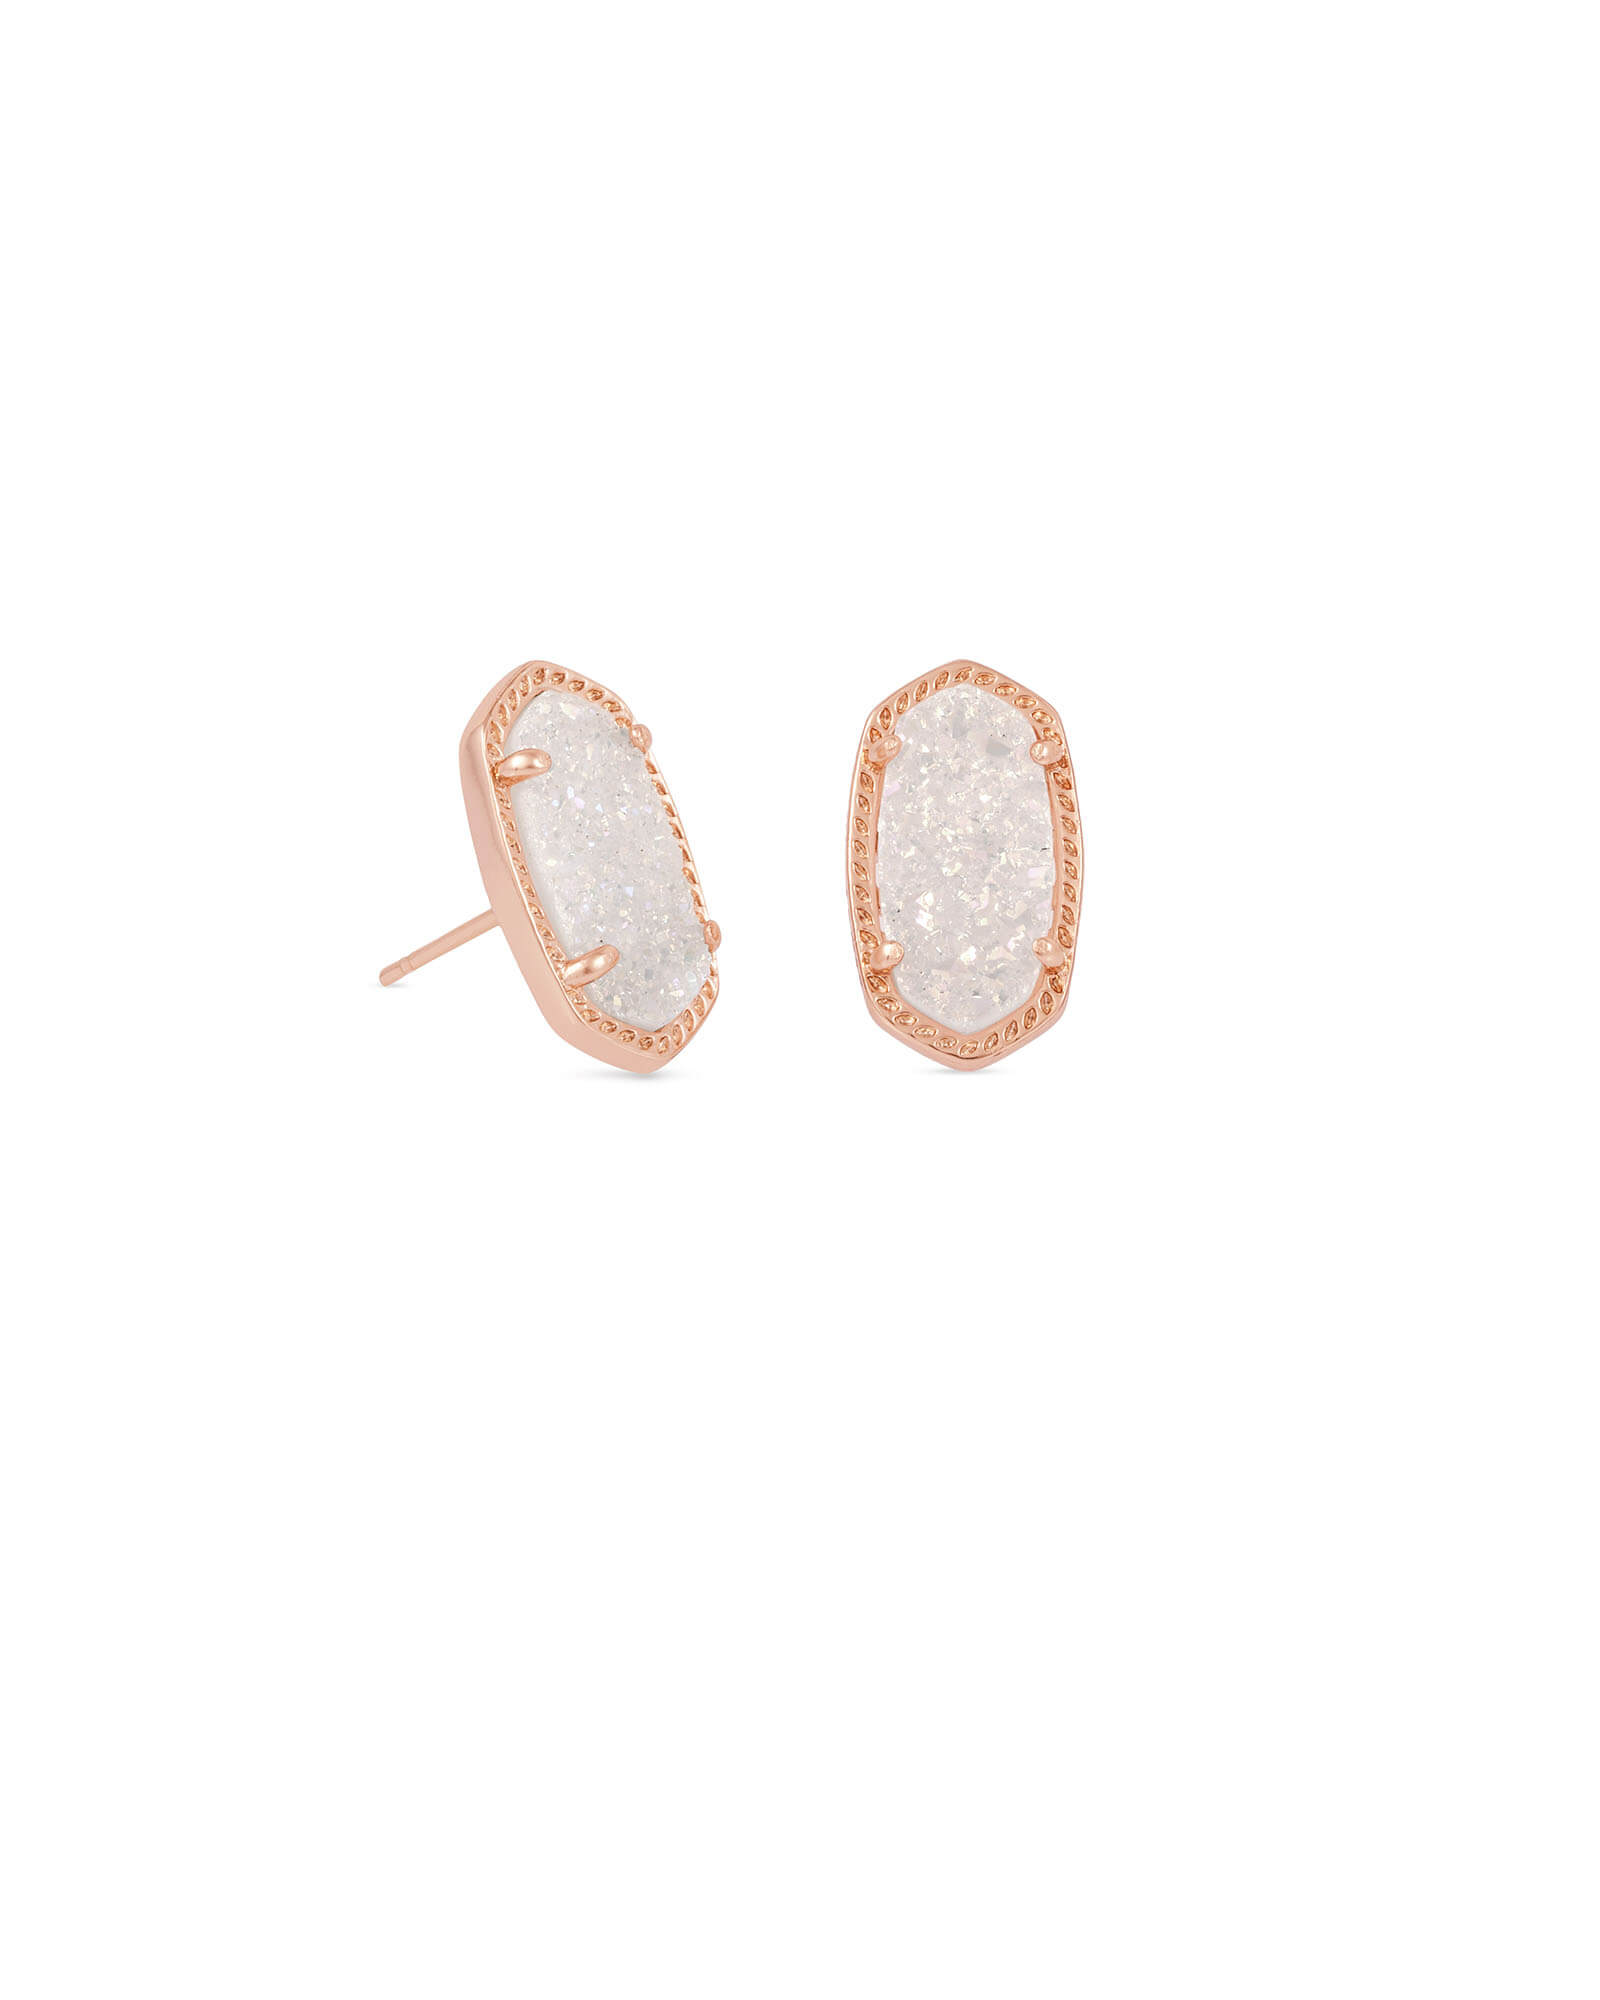 Kendra Scott Ellie Rose Gold Stud Earrings in Iridescent | Drusy